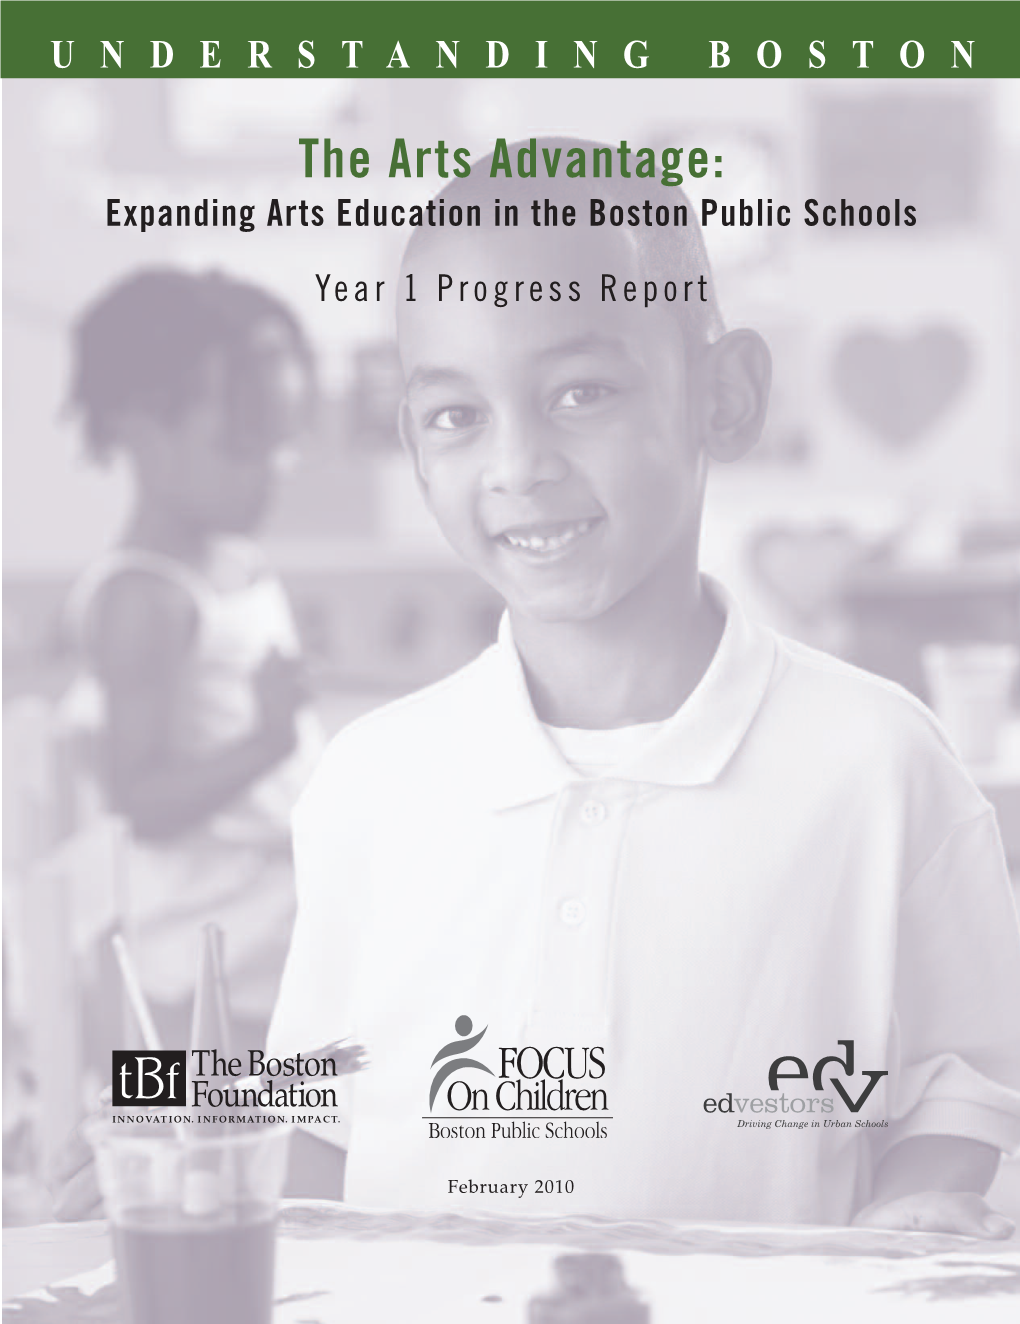 The Arts Advantage: Expanding Arts Education in the Boston Public Schools